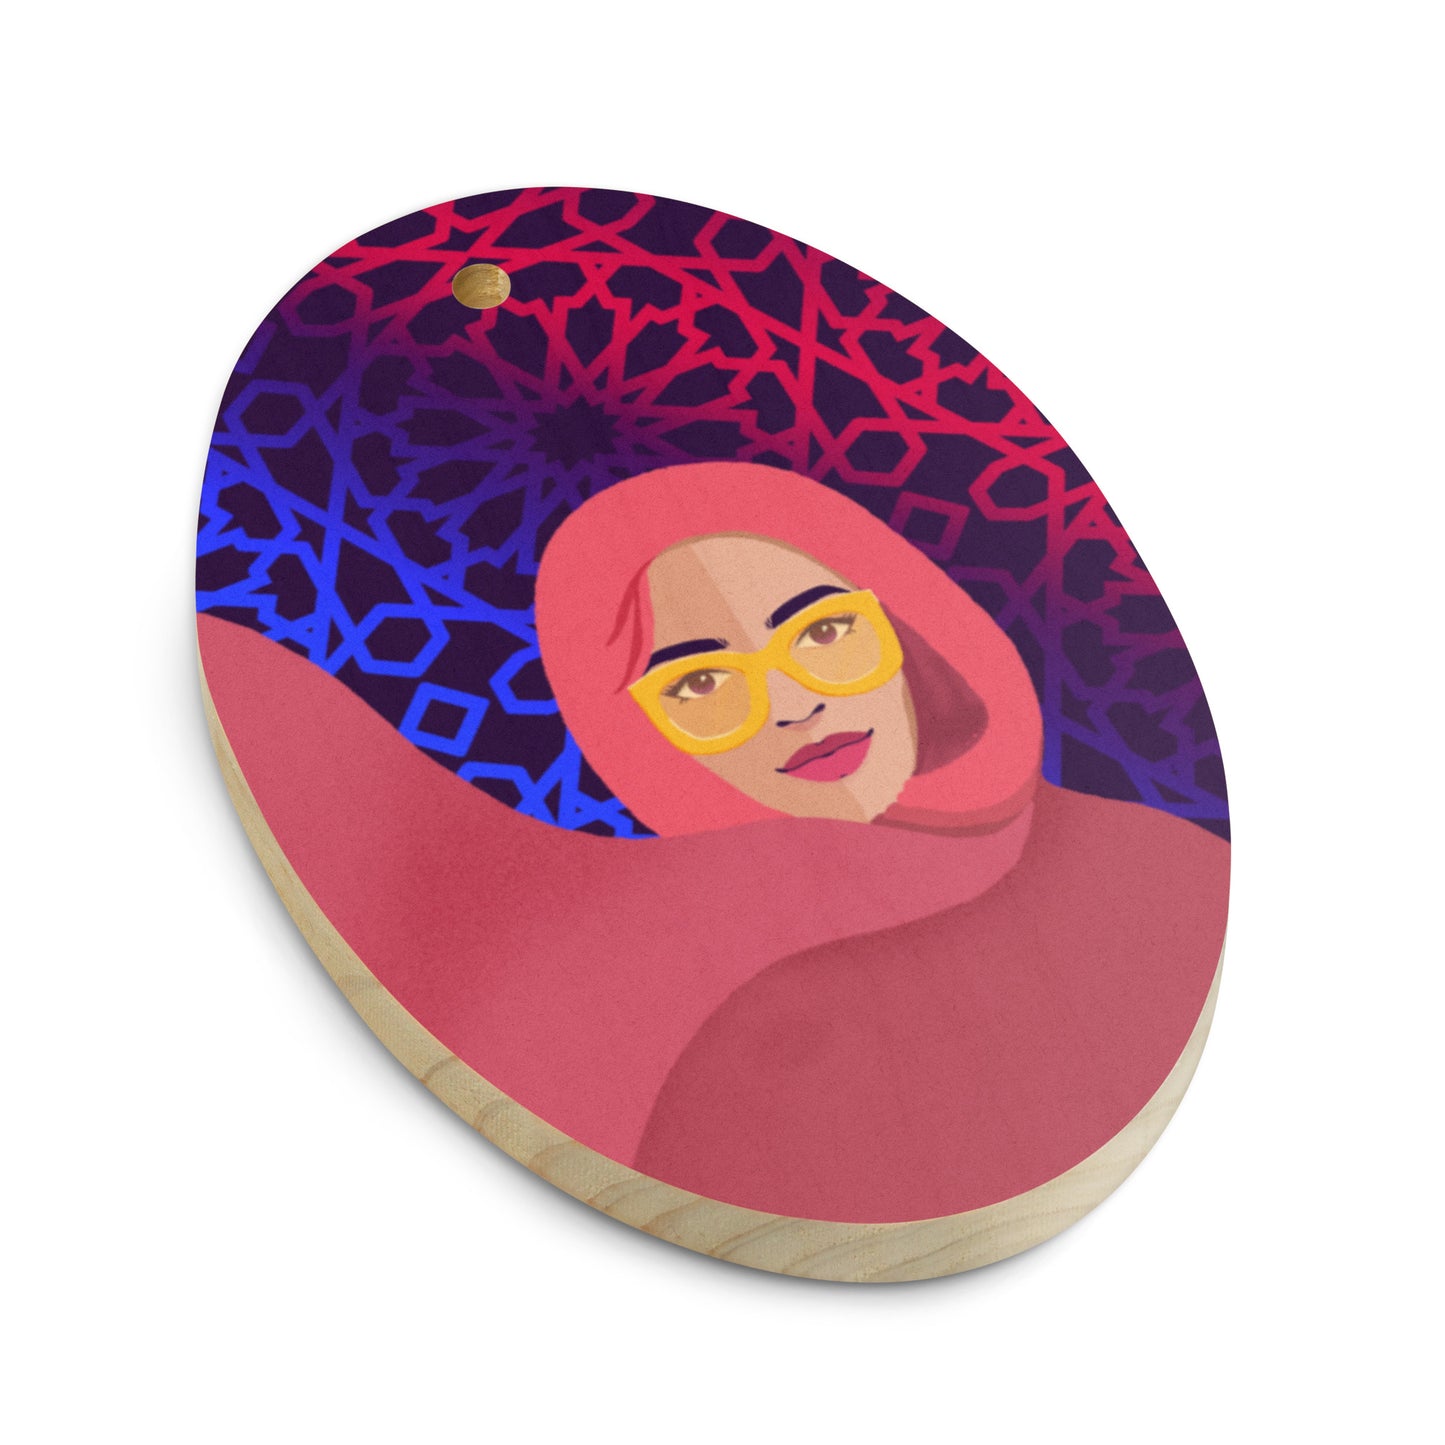 Wooden ornaments / magnet - Hijabi Pop Art Collection - Geometric Pop